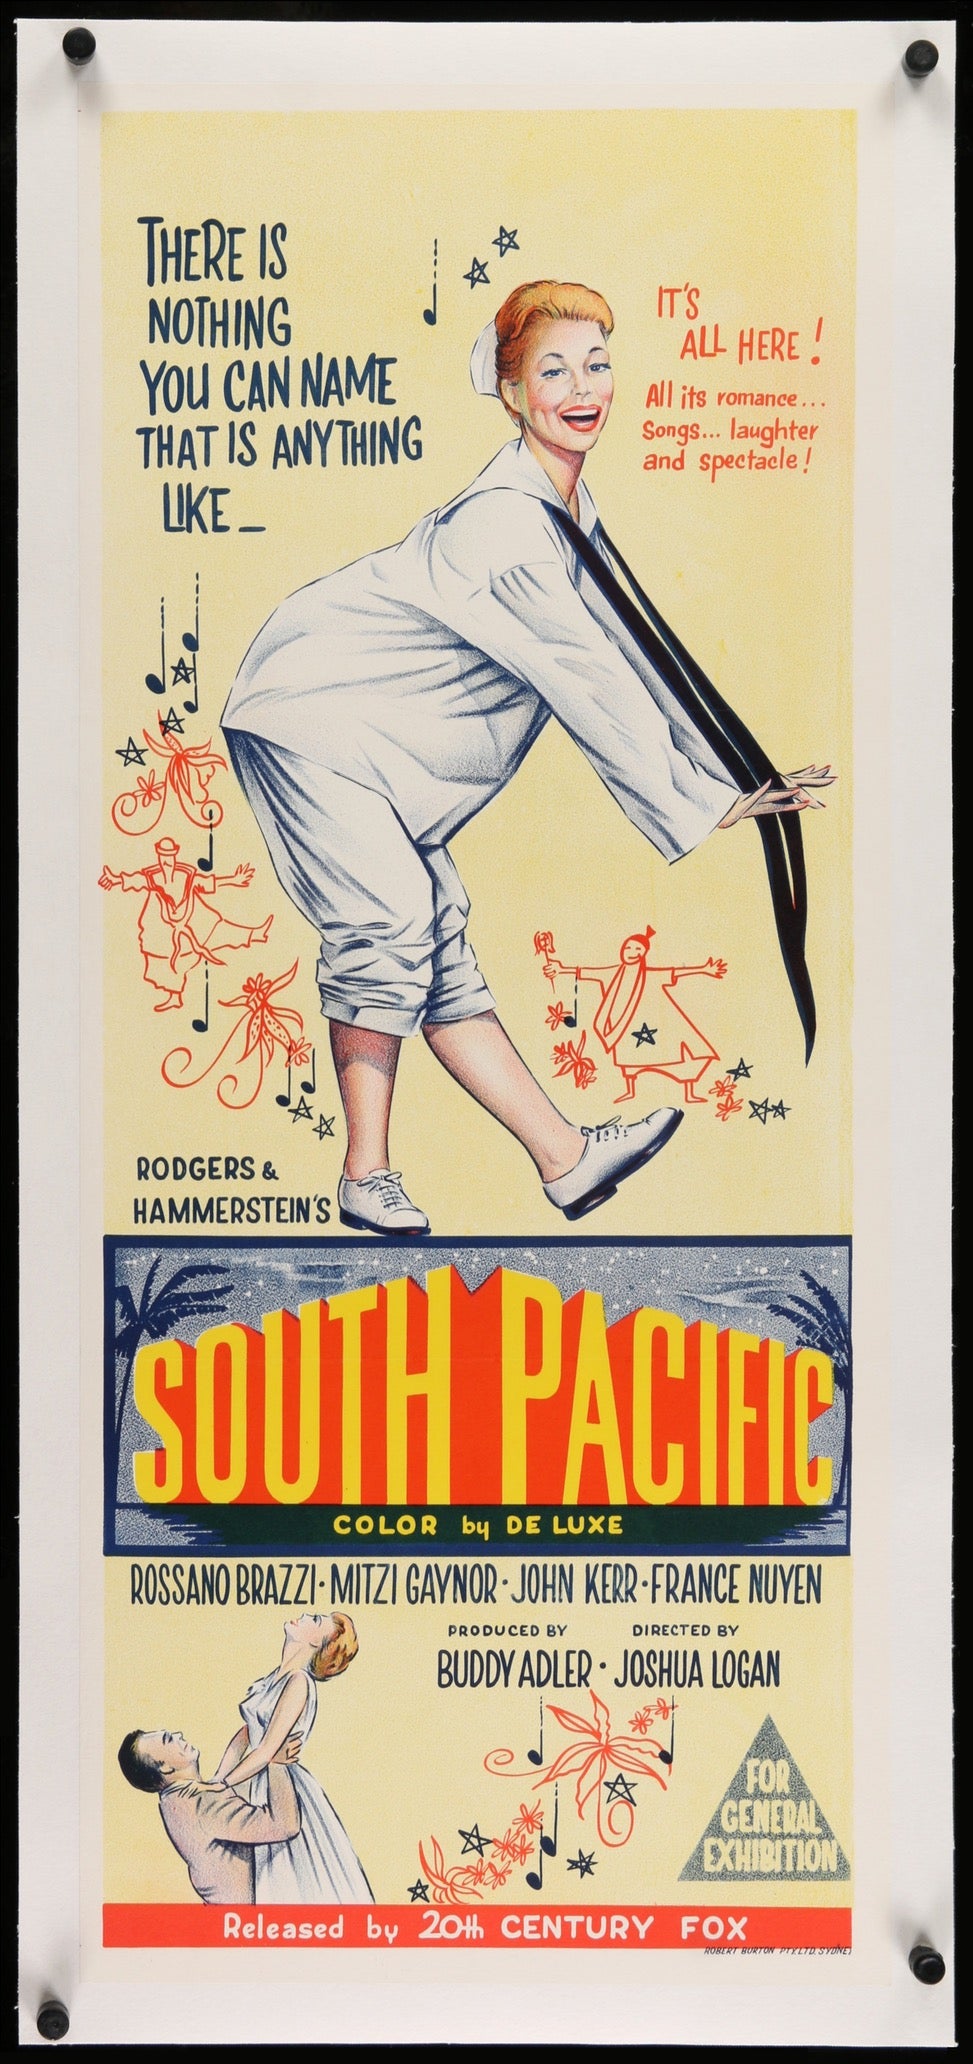 South Pacific (1958) original movie poster for sale at Original Film Art